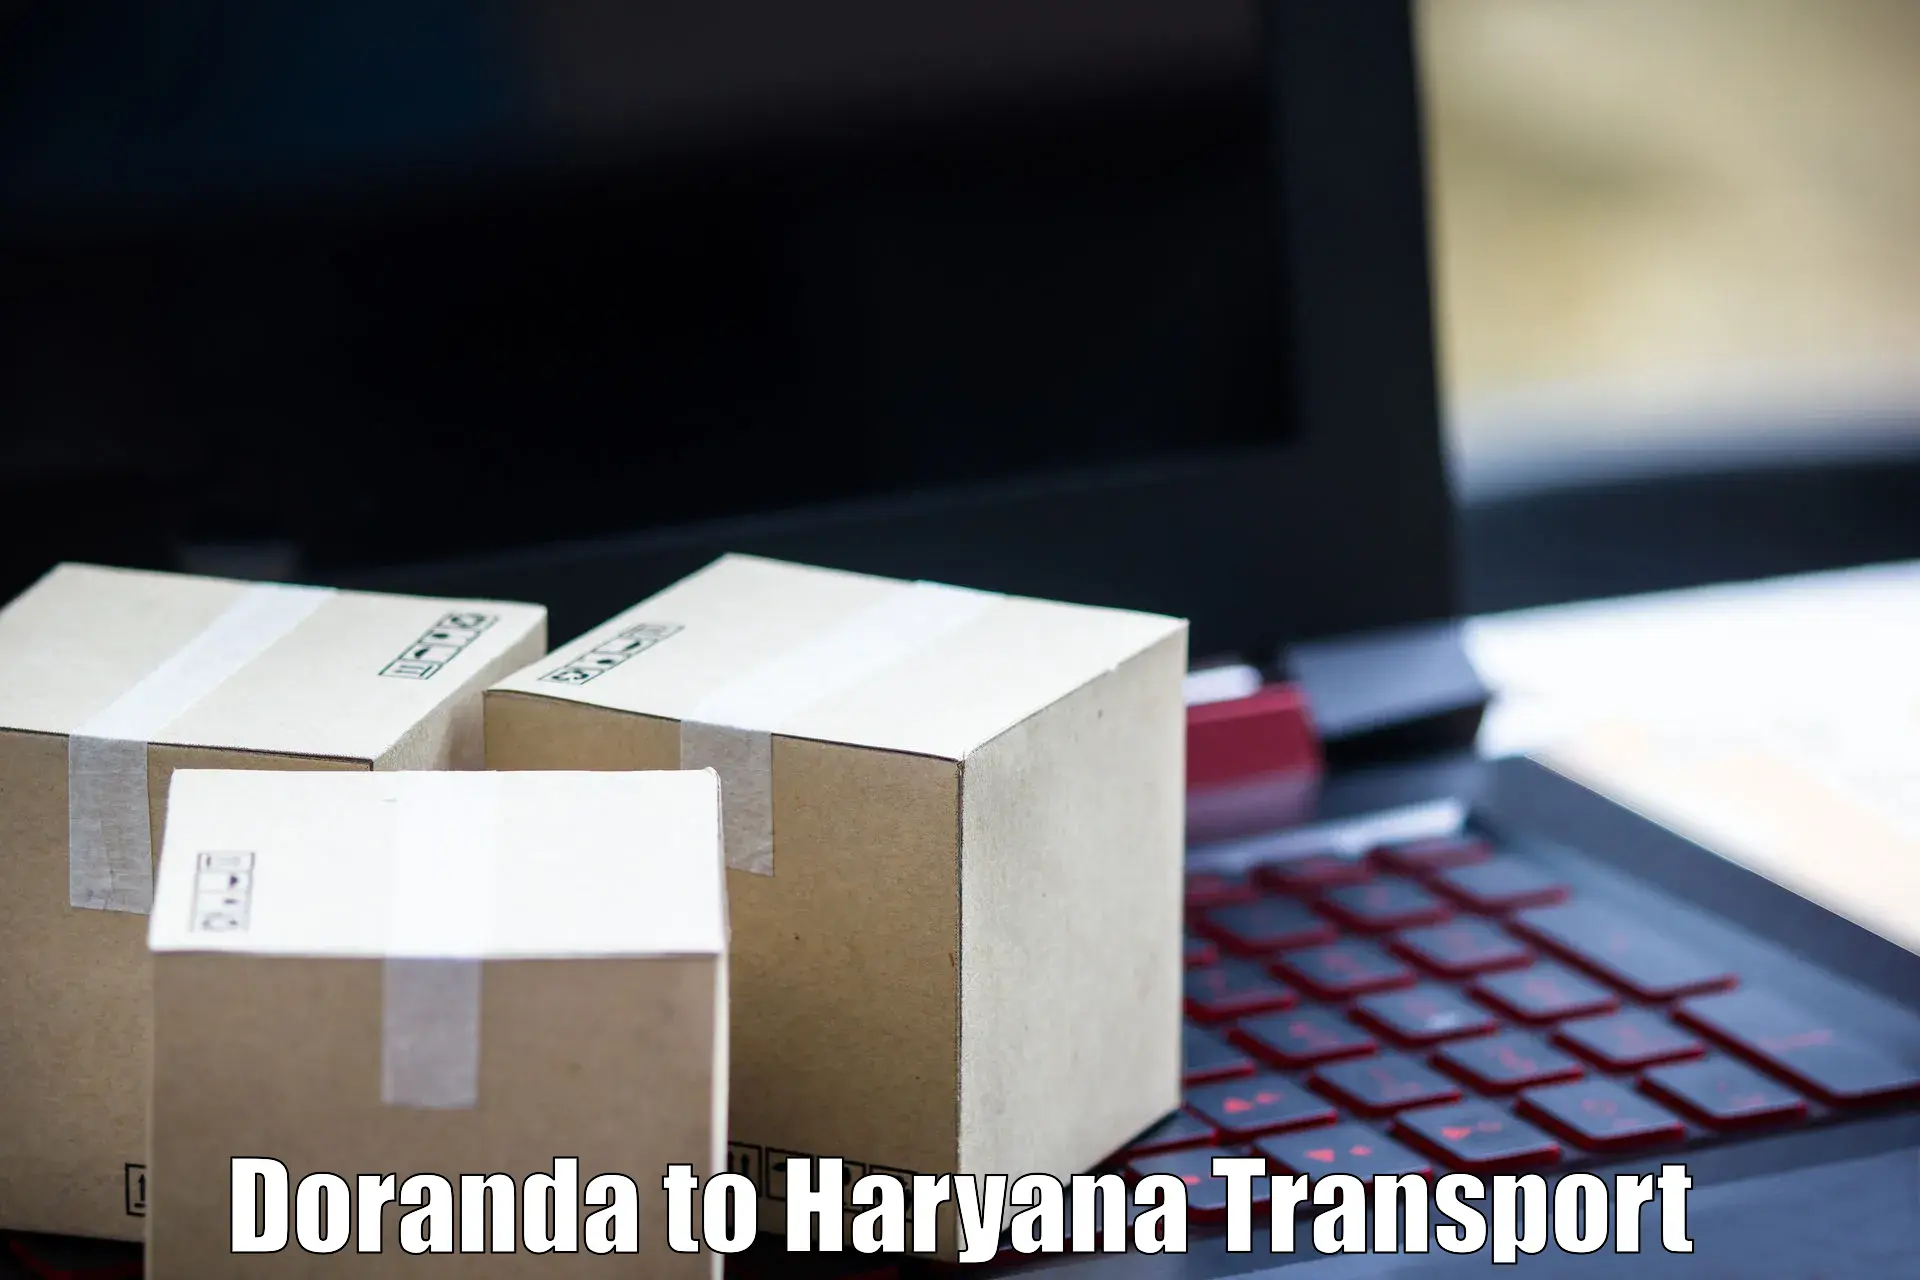 Shipping partner Doranda to NCR Haryana